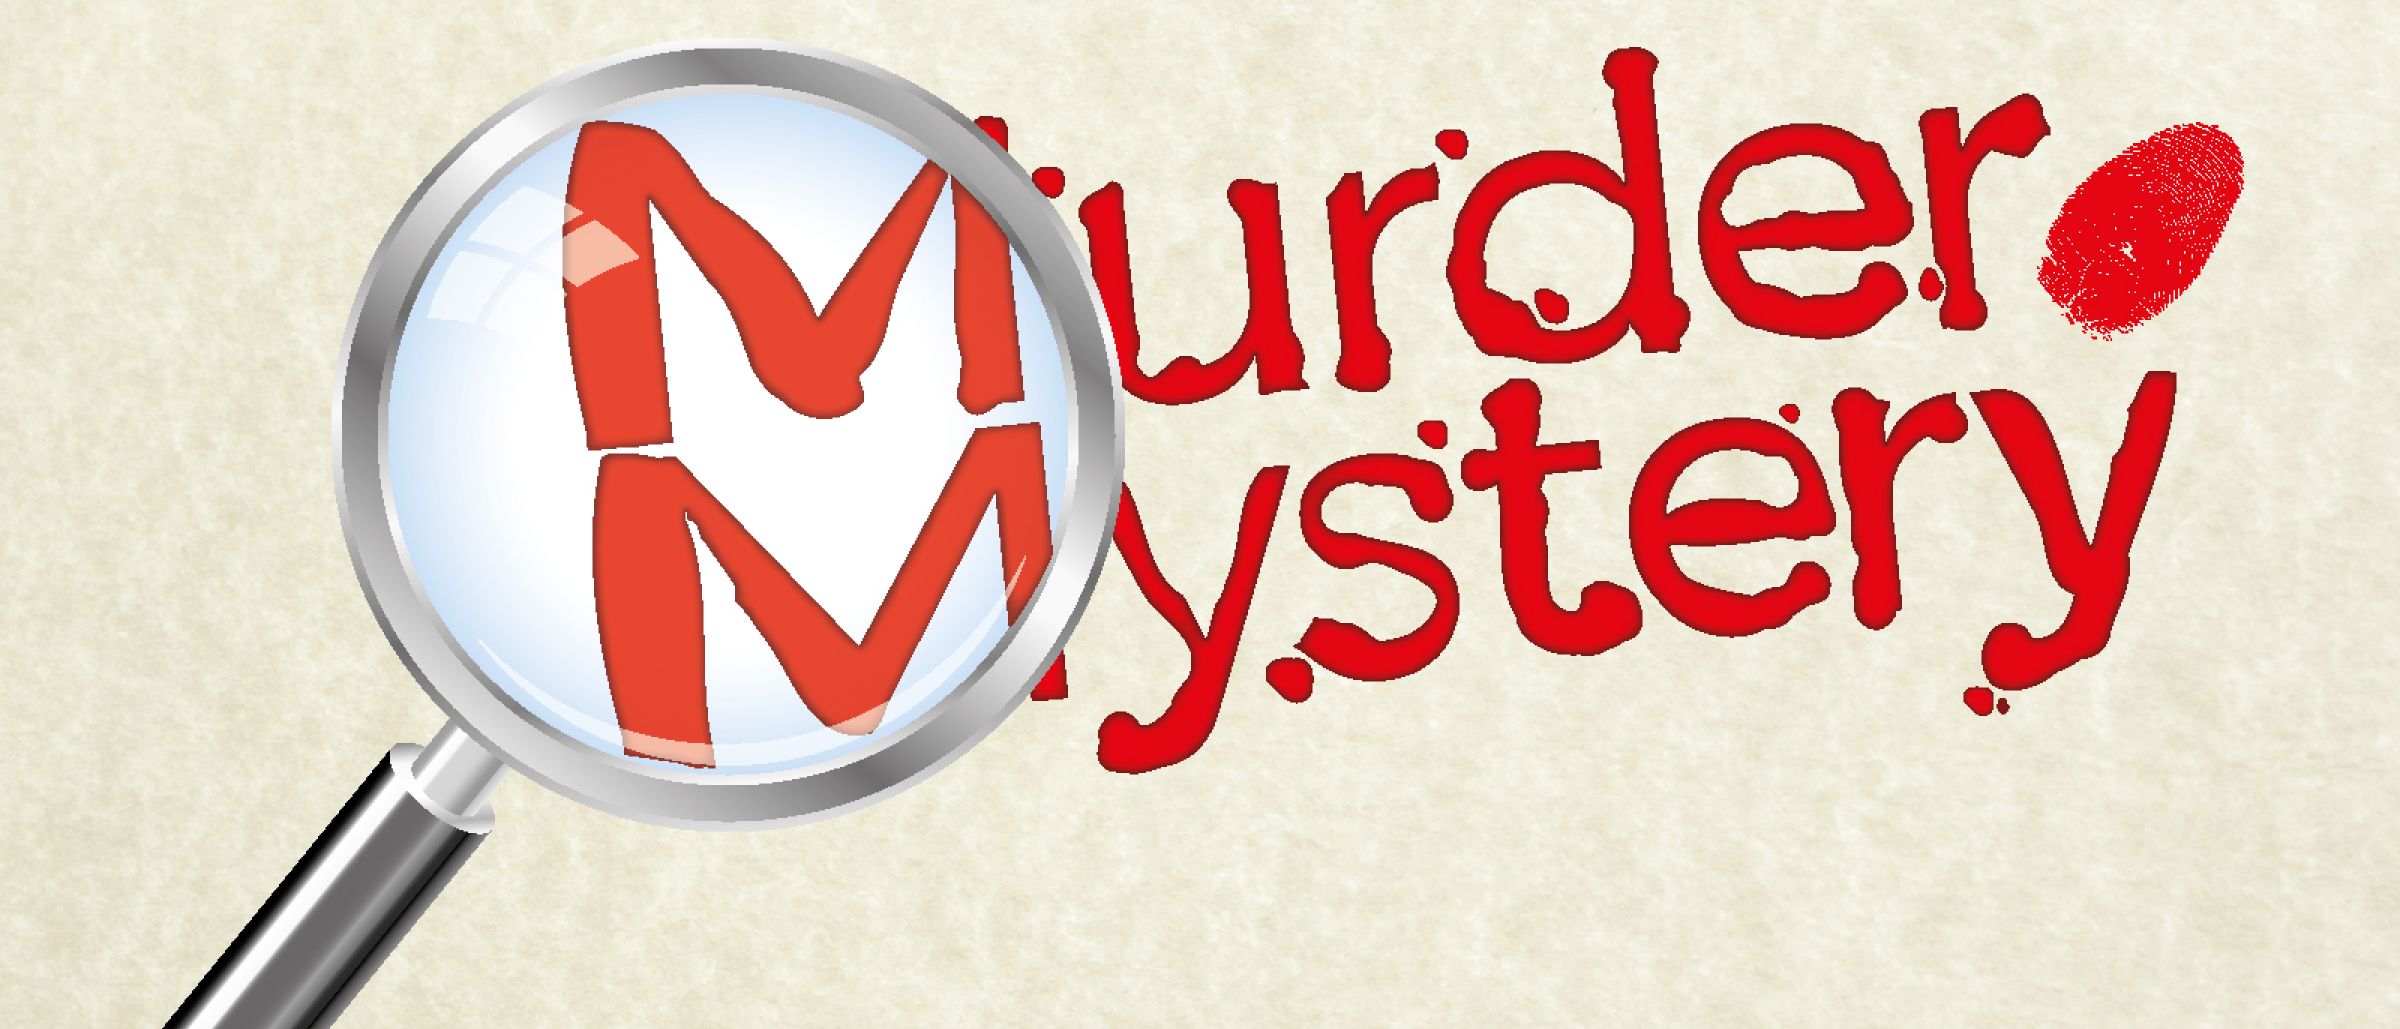 murder-mystery